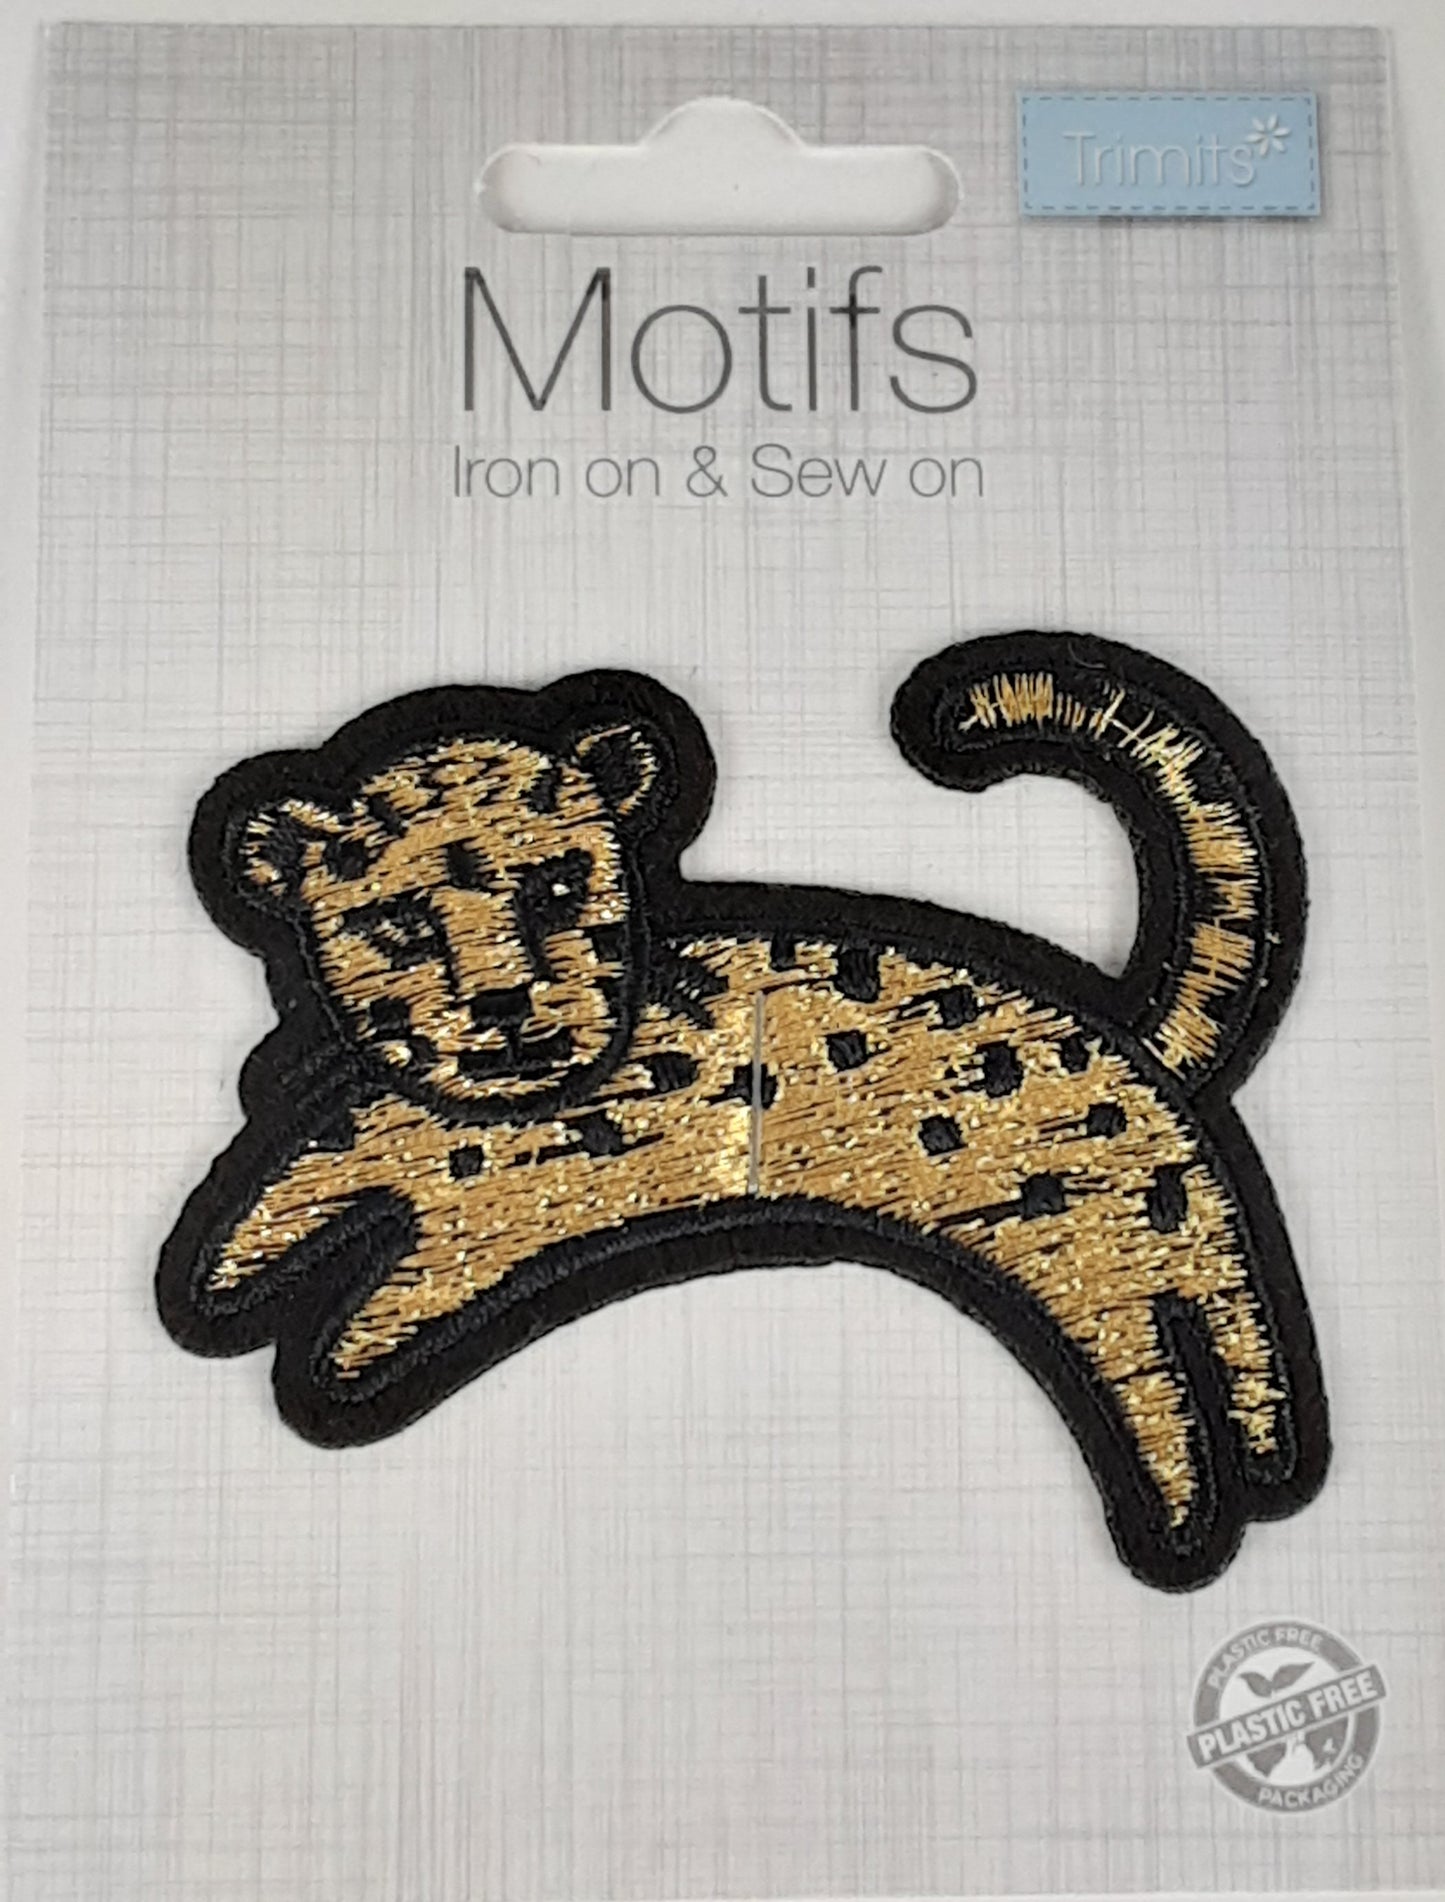 Iron or sew on Motifs-Lion